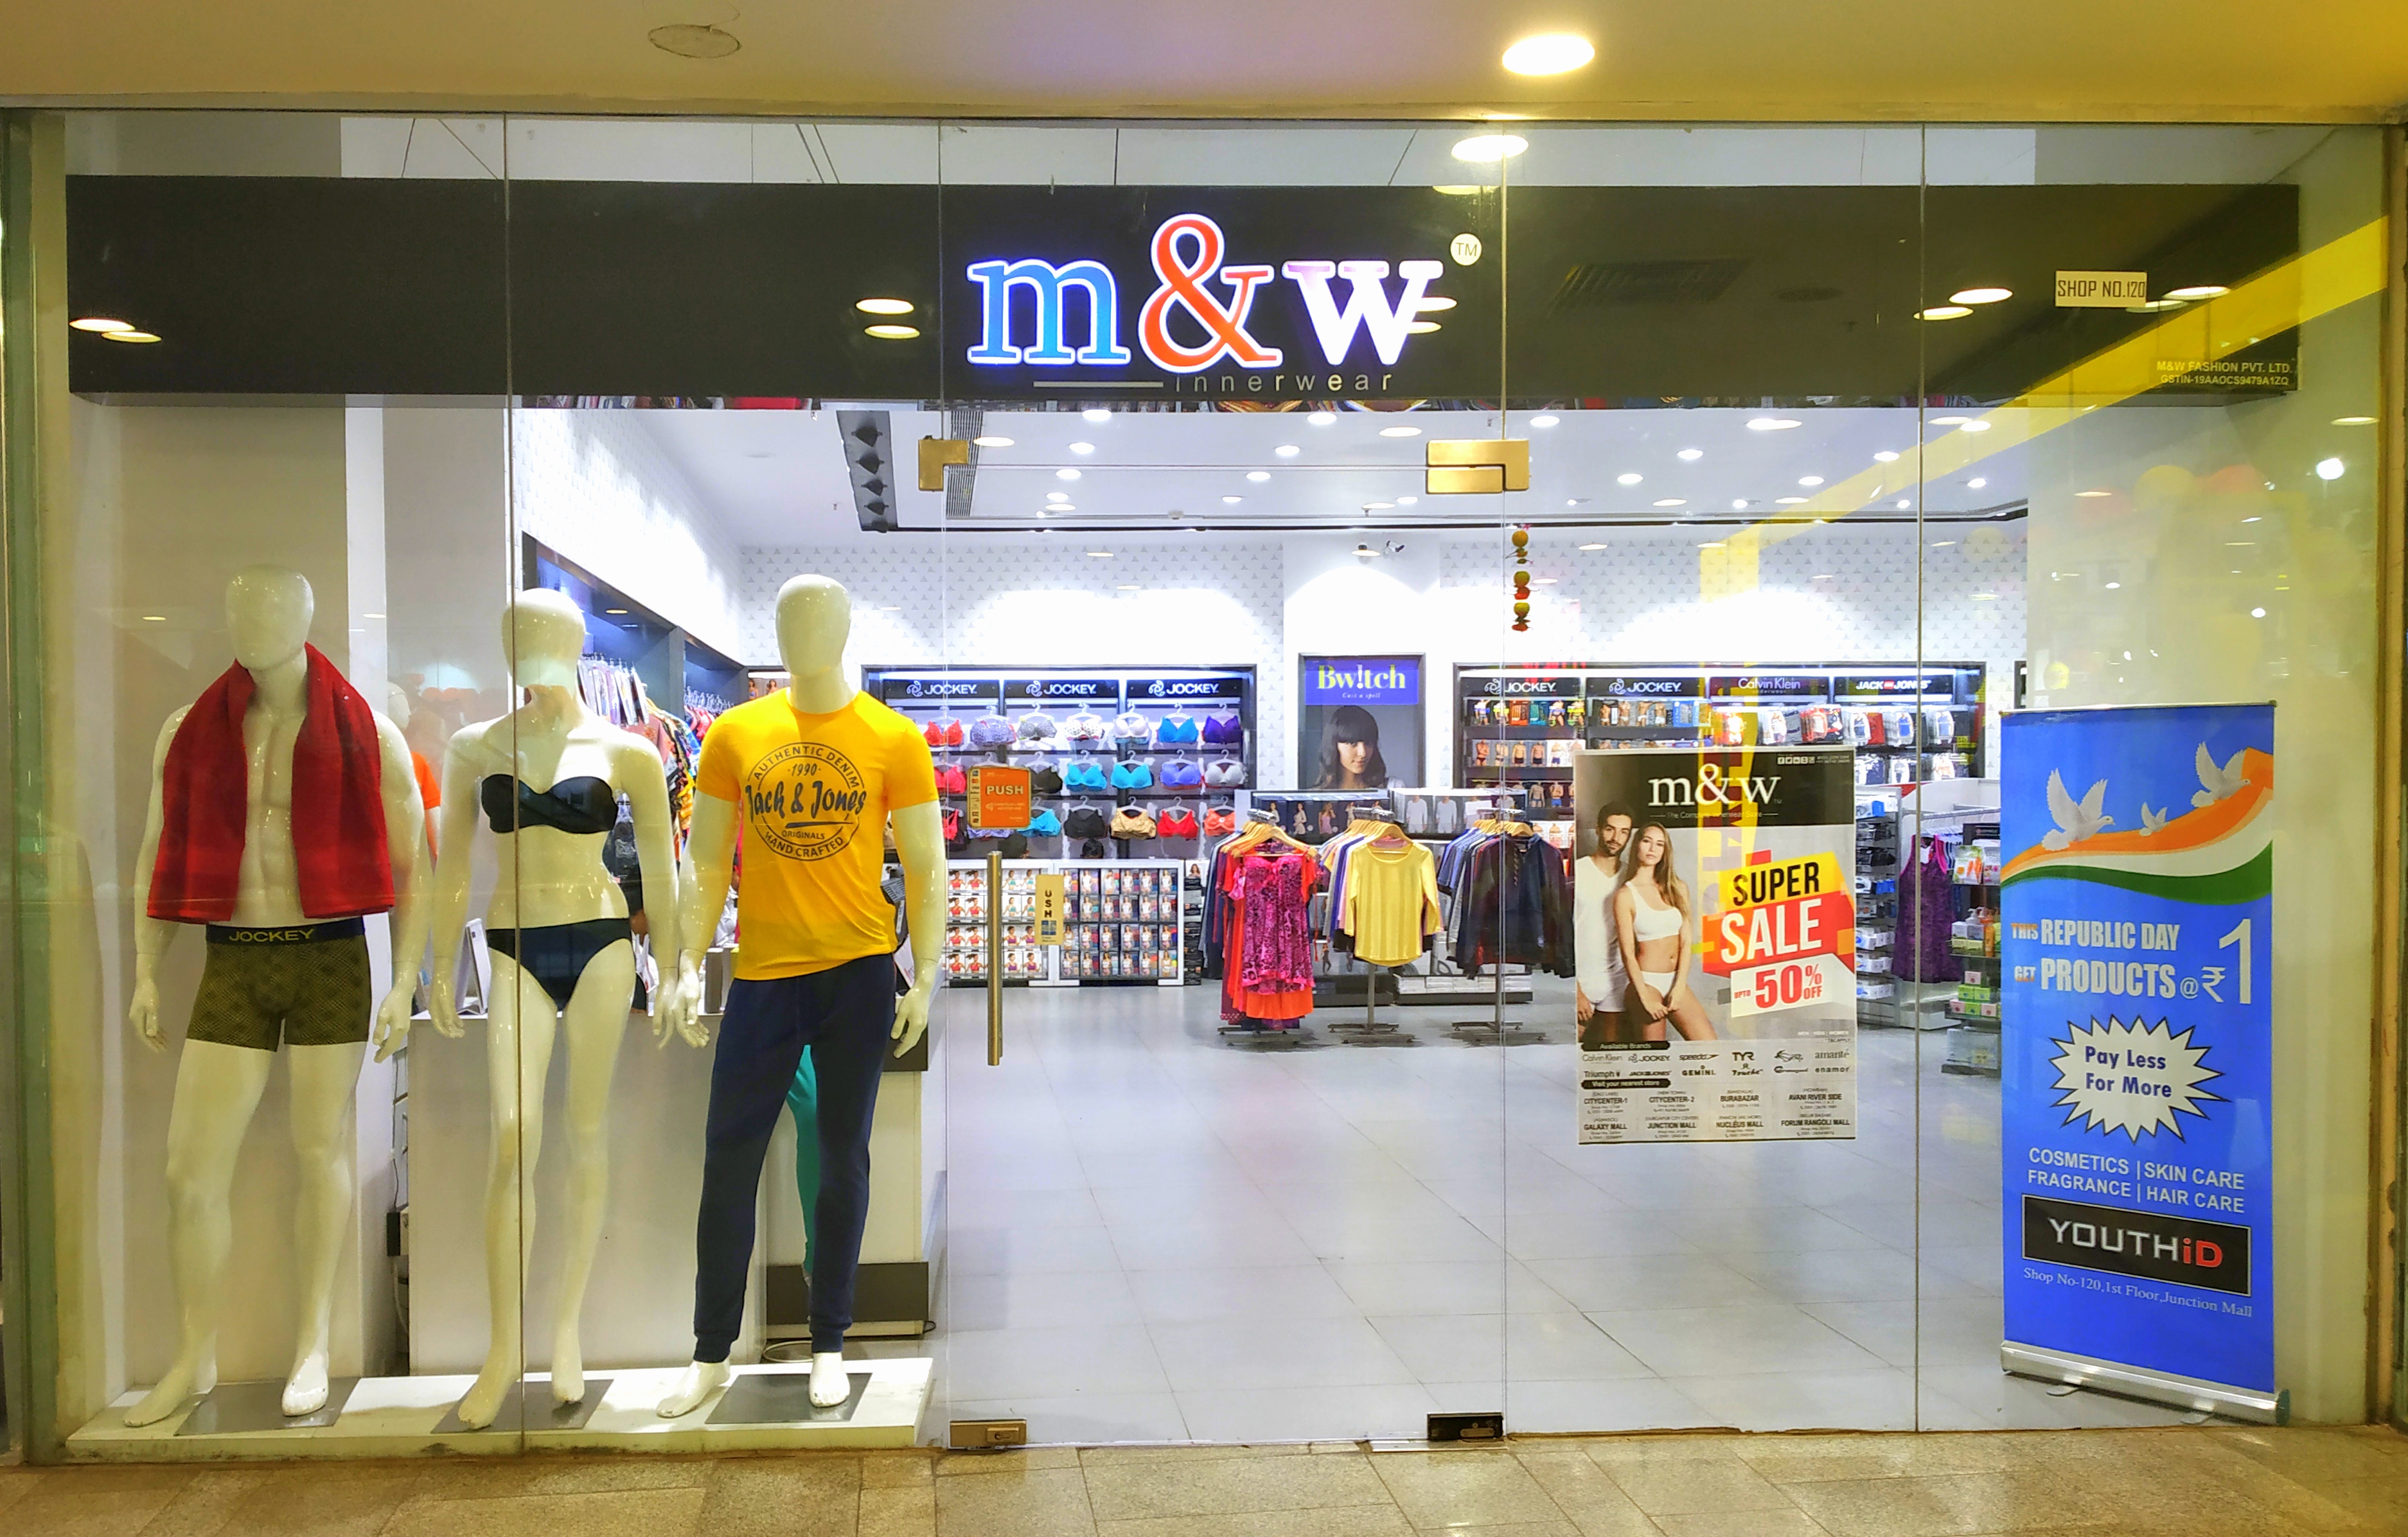 m&w inner-wear - Shopping centre in durgapur